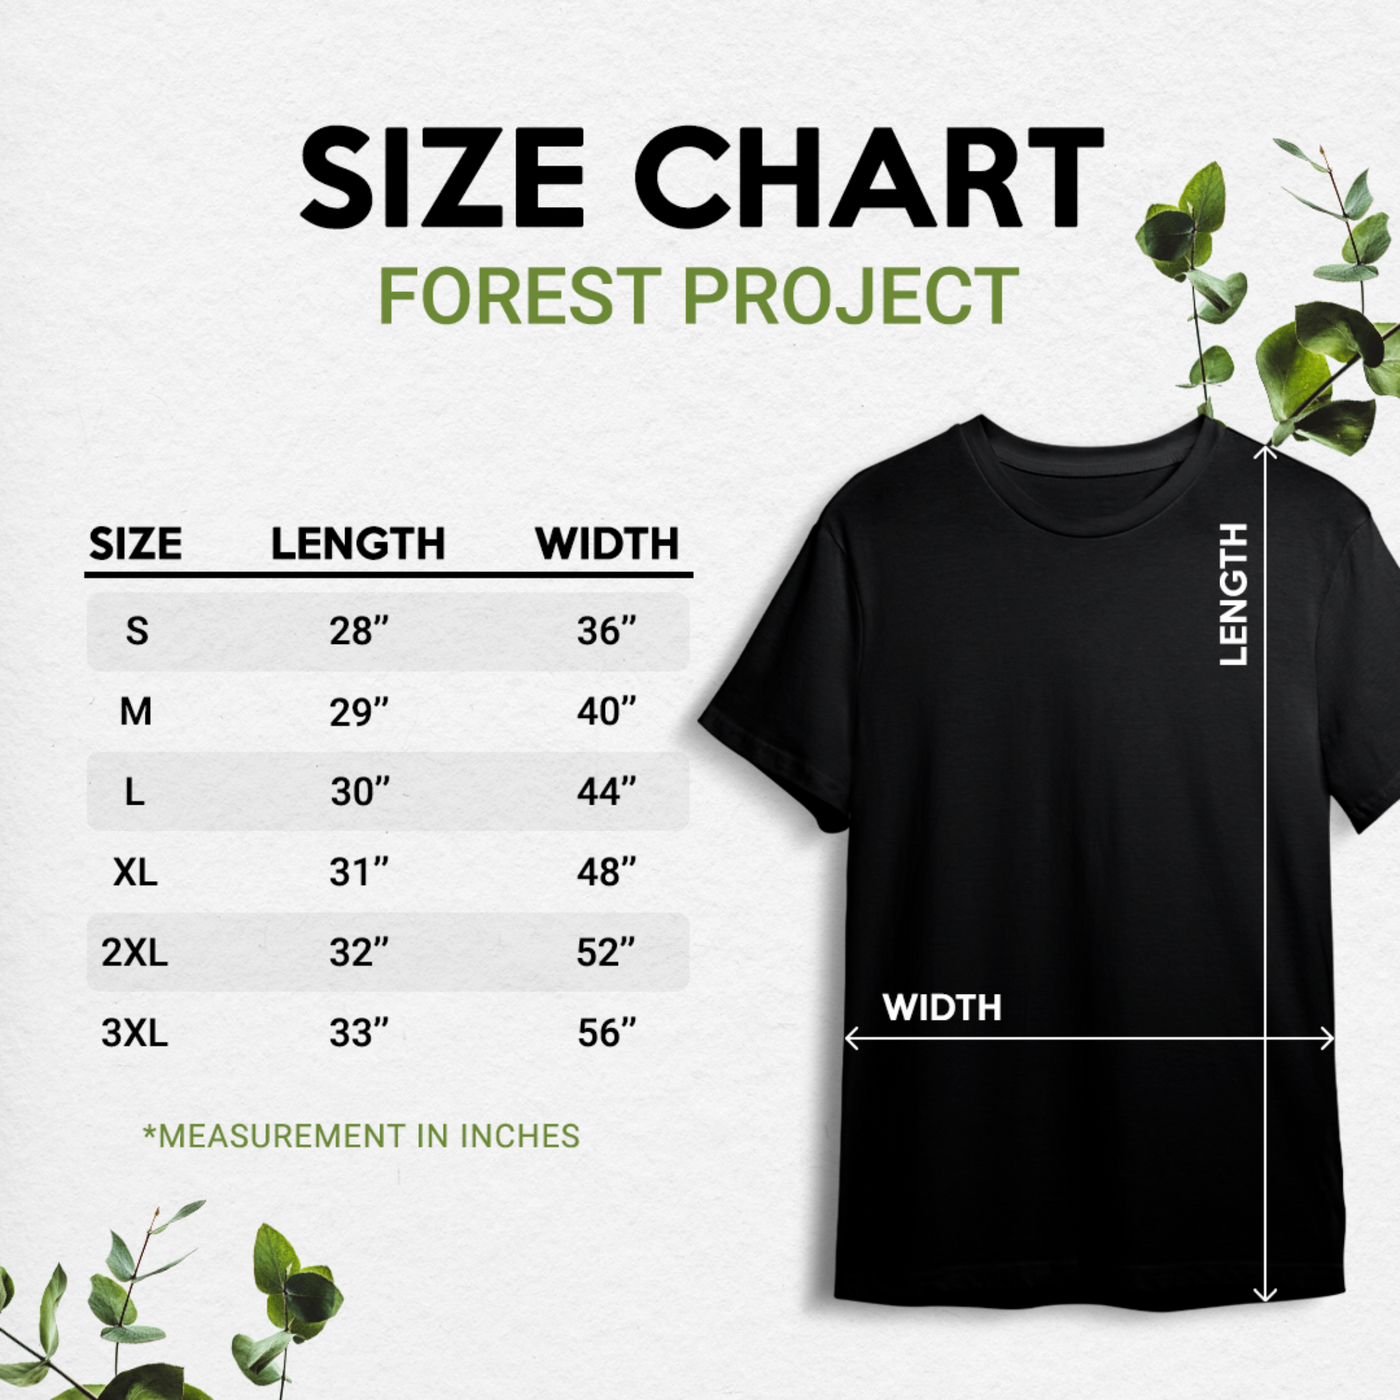 Plant More Trees T-Shirt